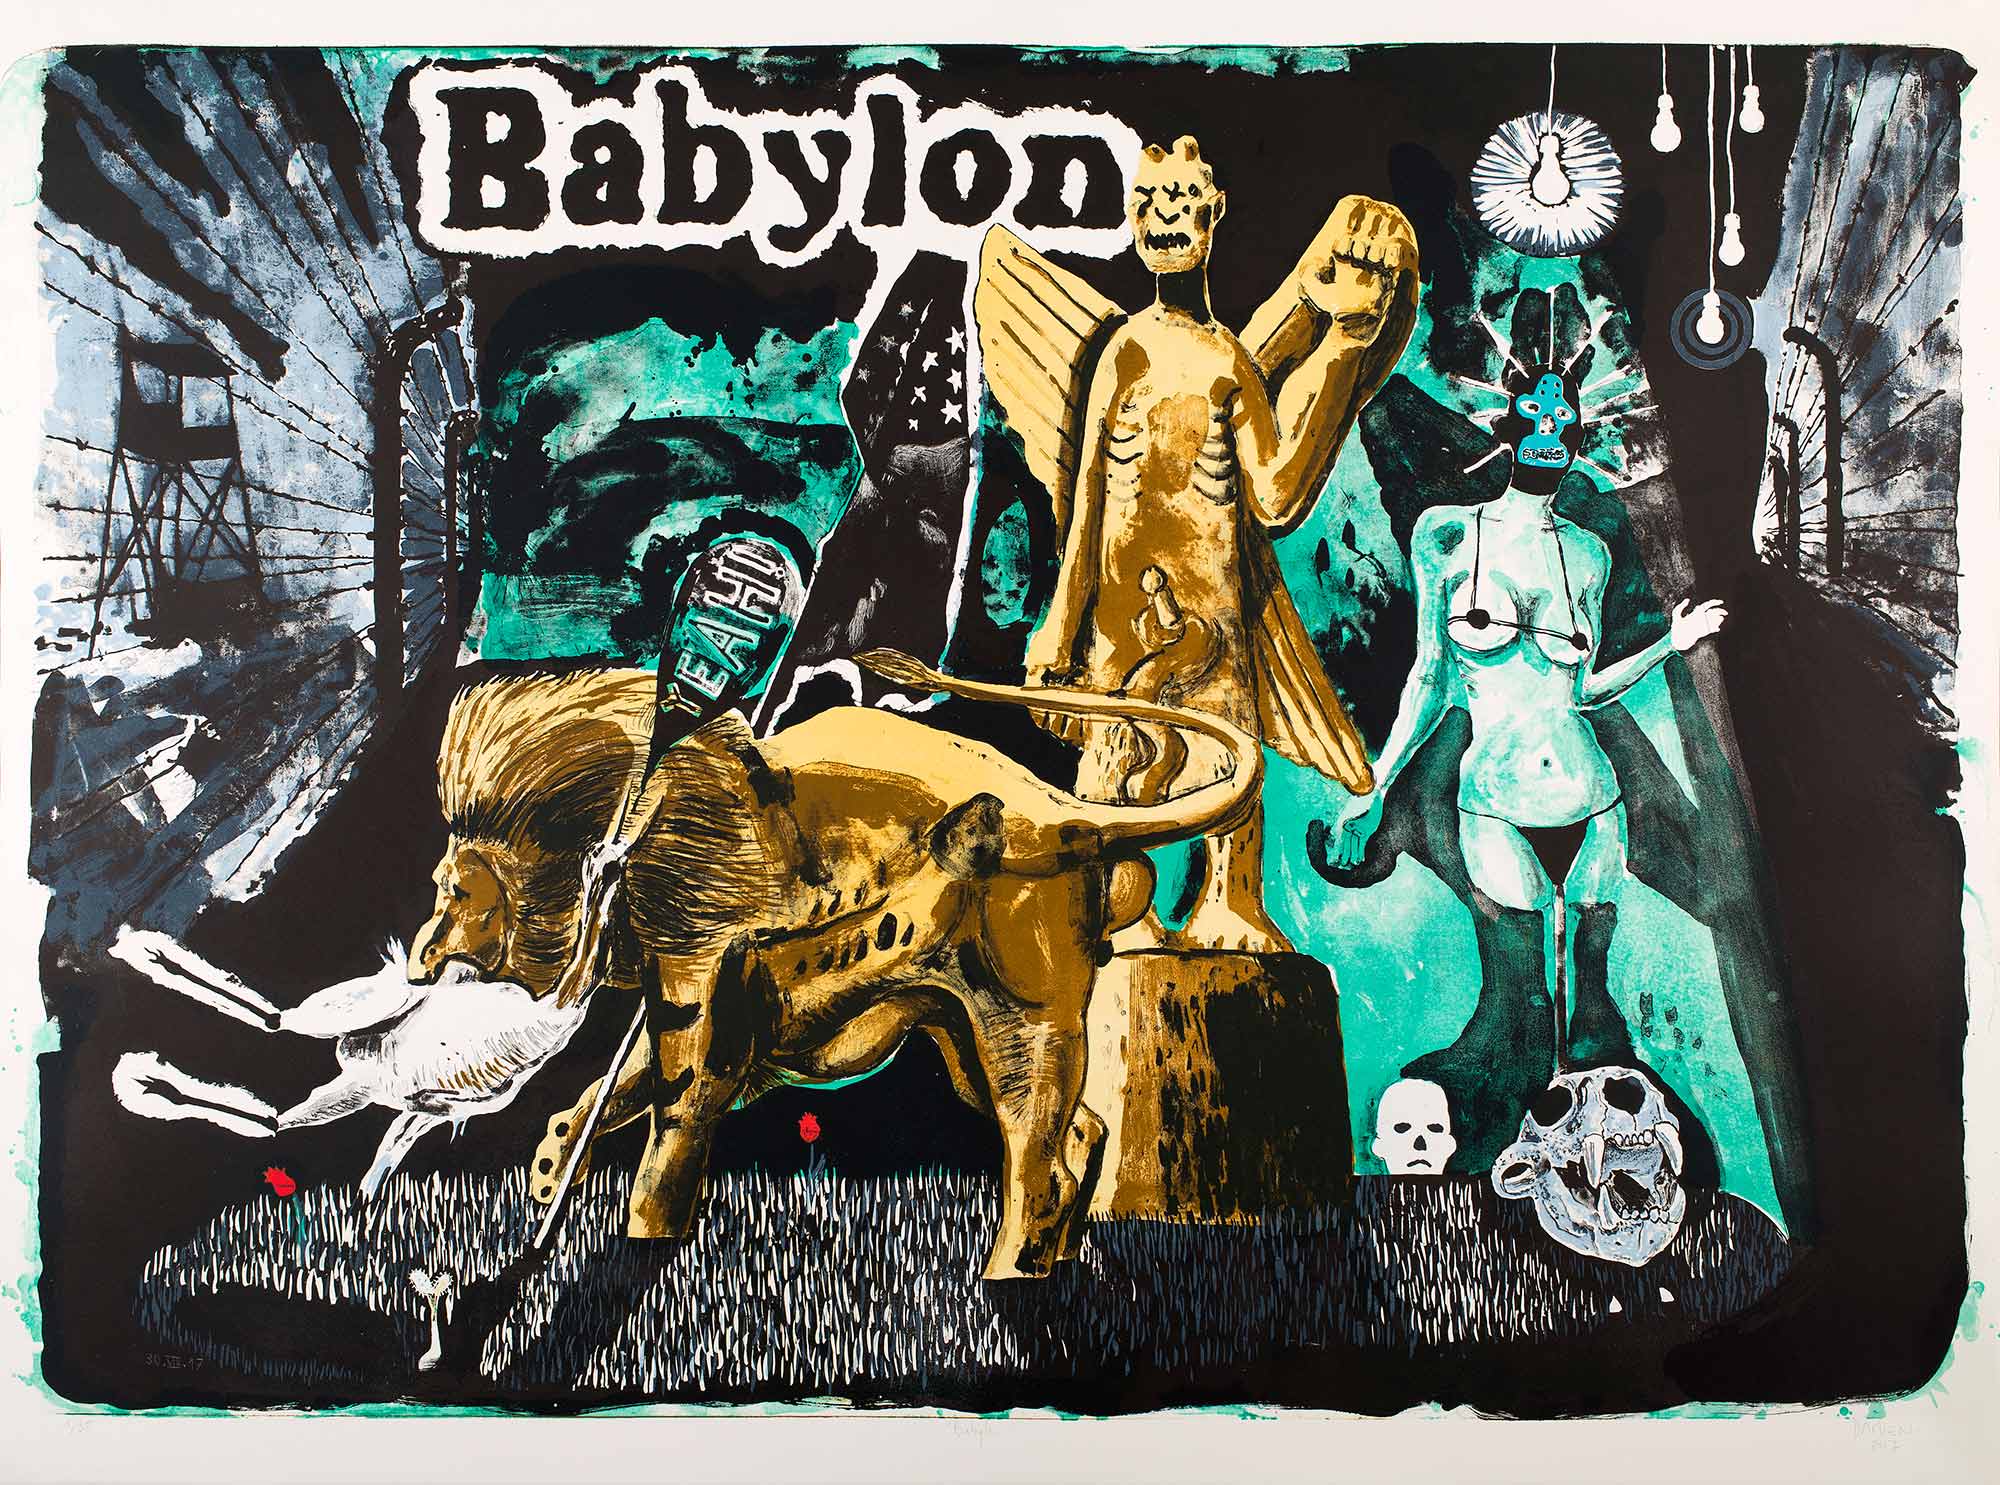 Damien DEROUBAIX - Babylon, 2017